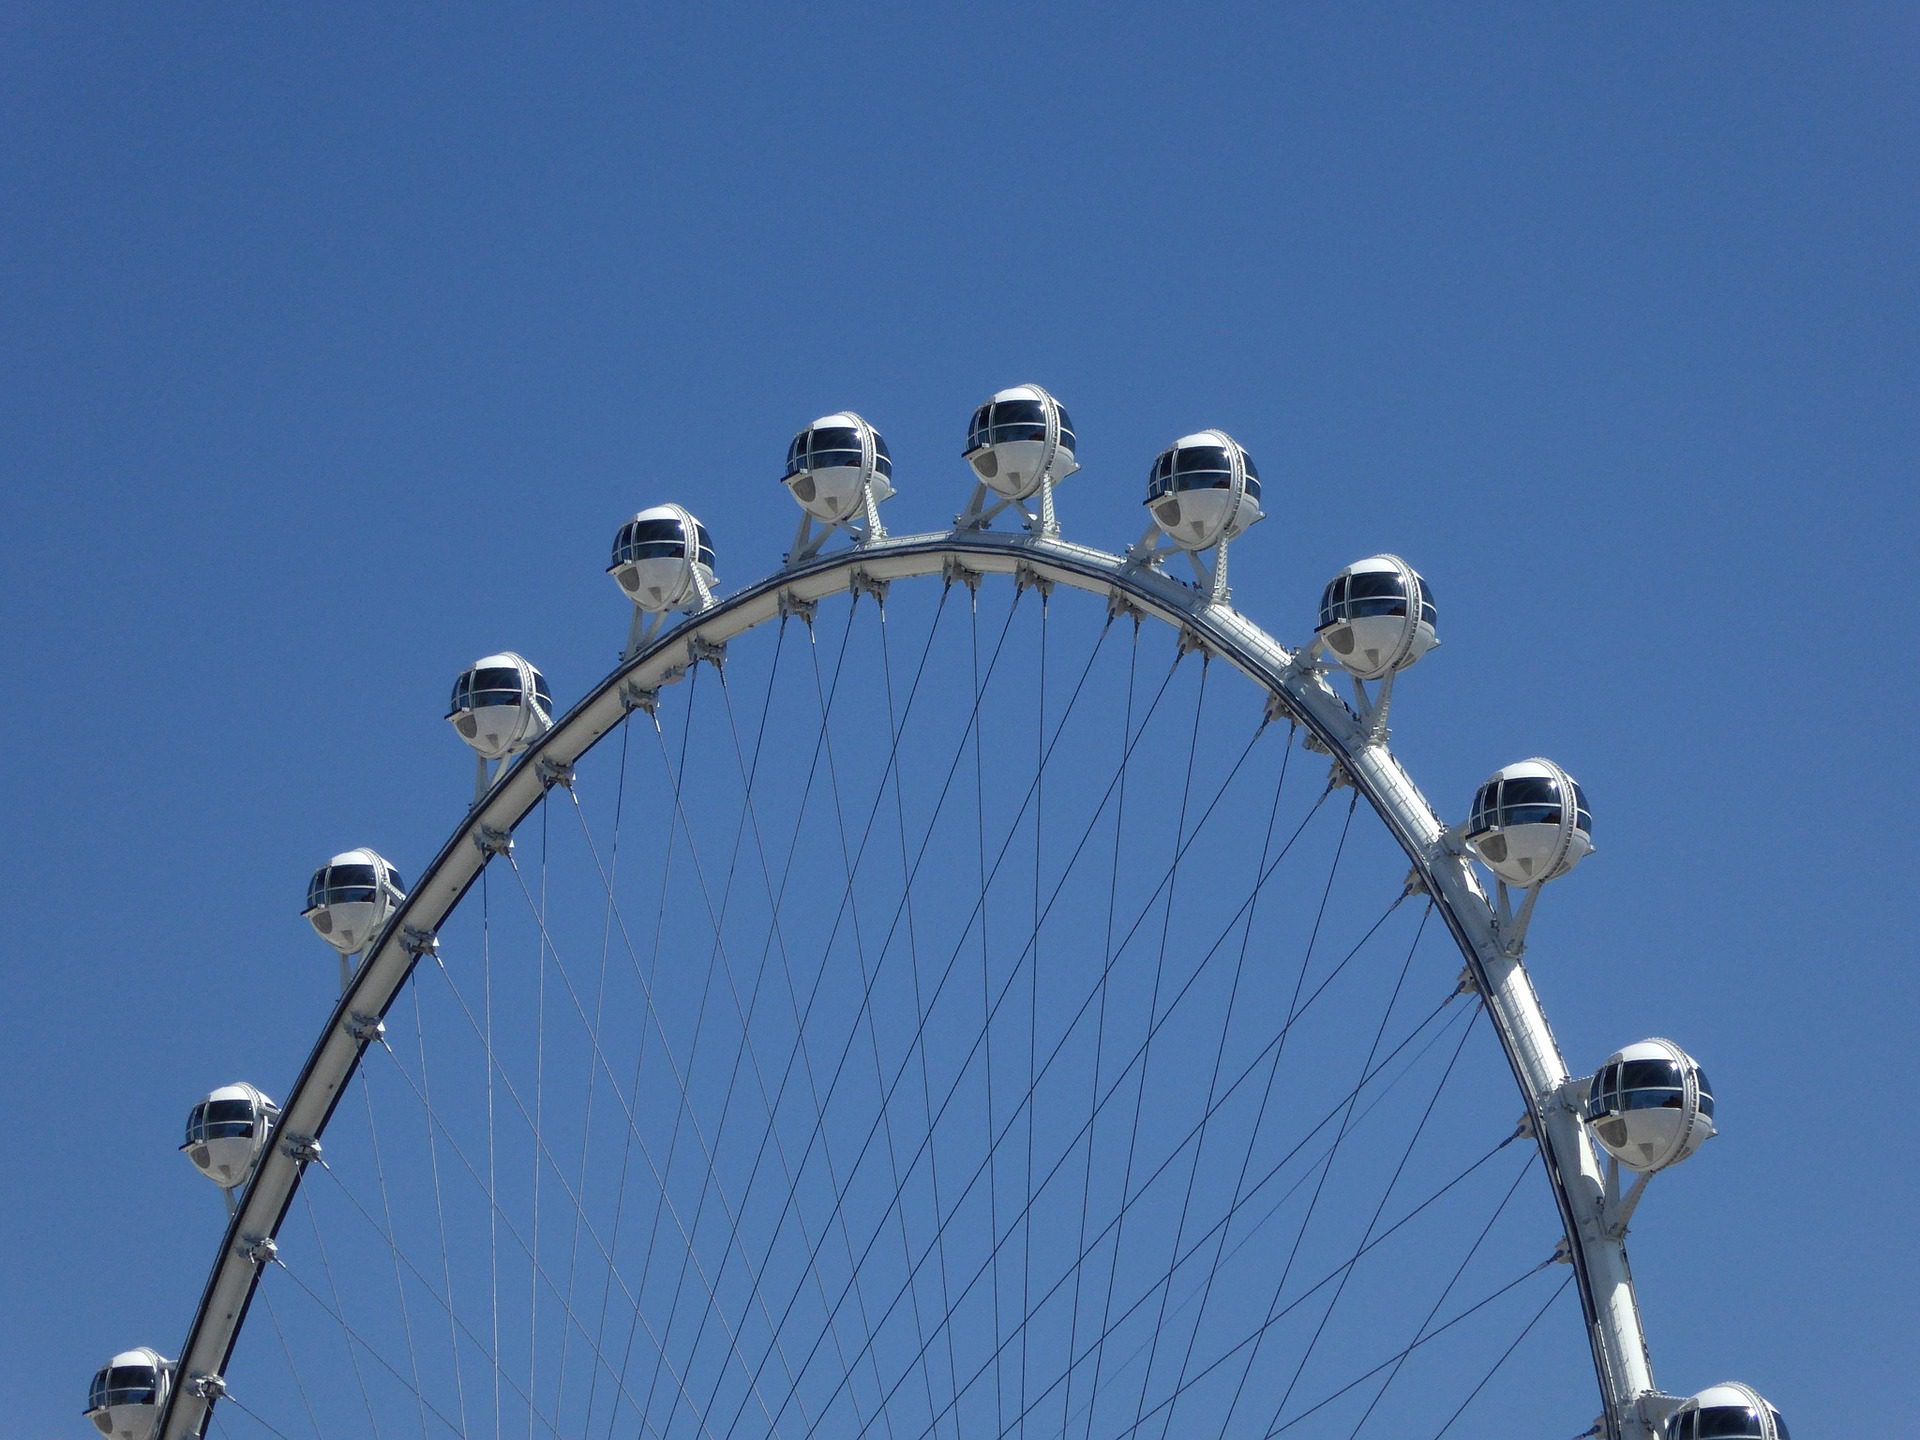 High Roller Observation Wheel, Las Vegas